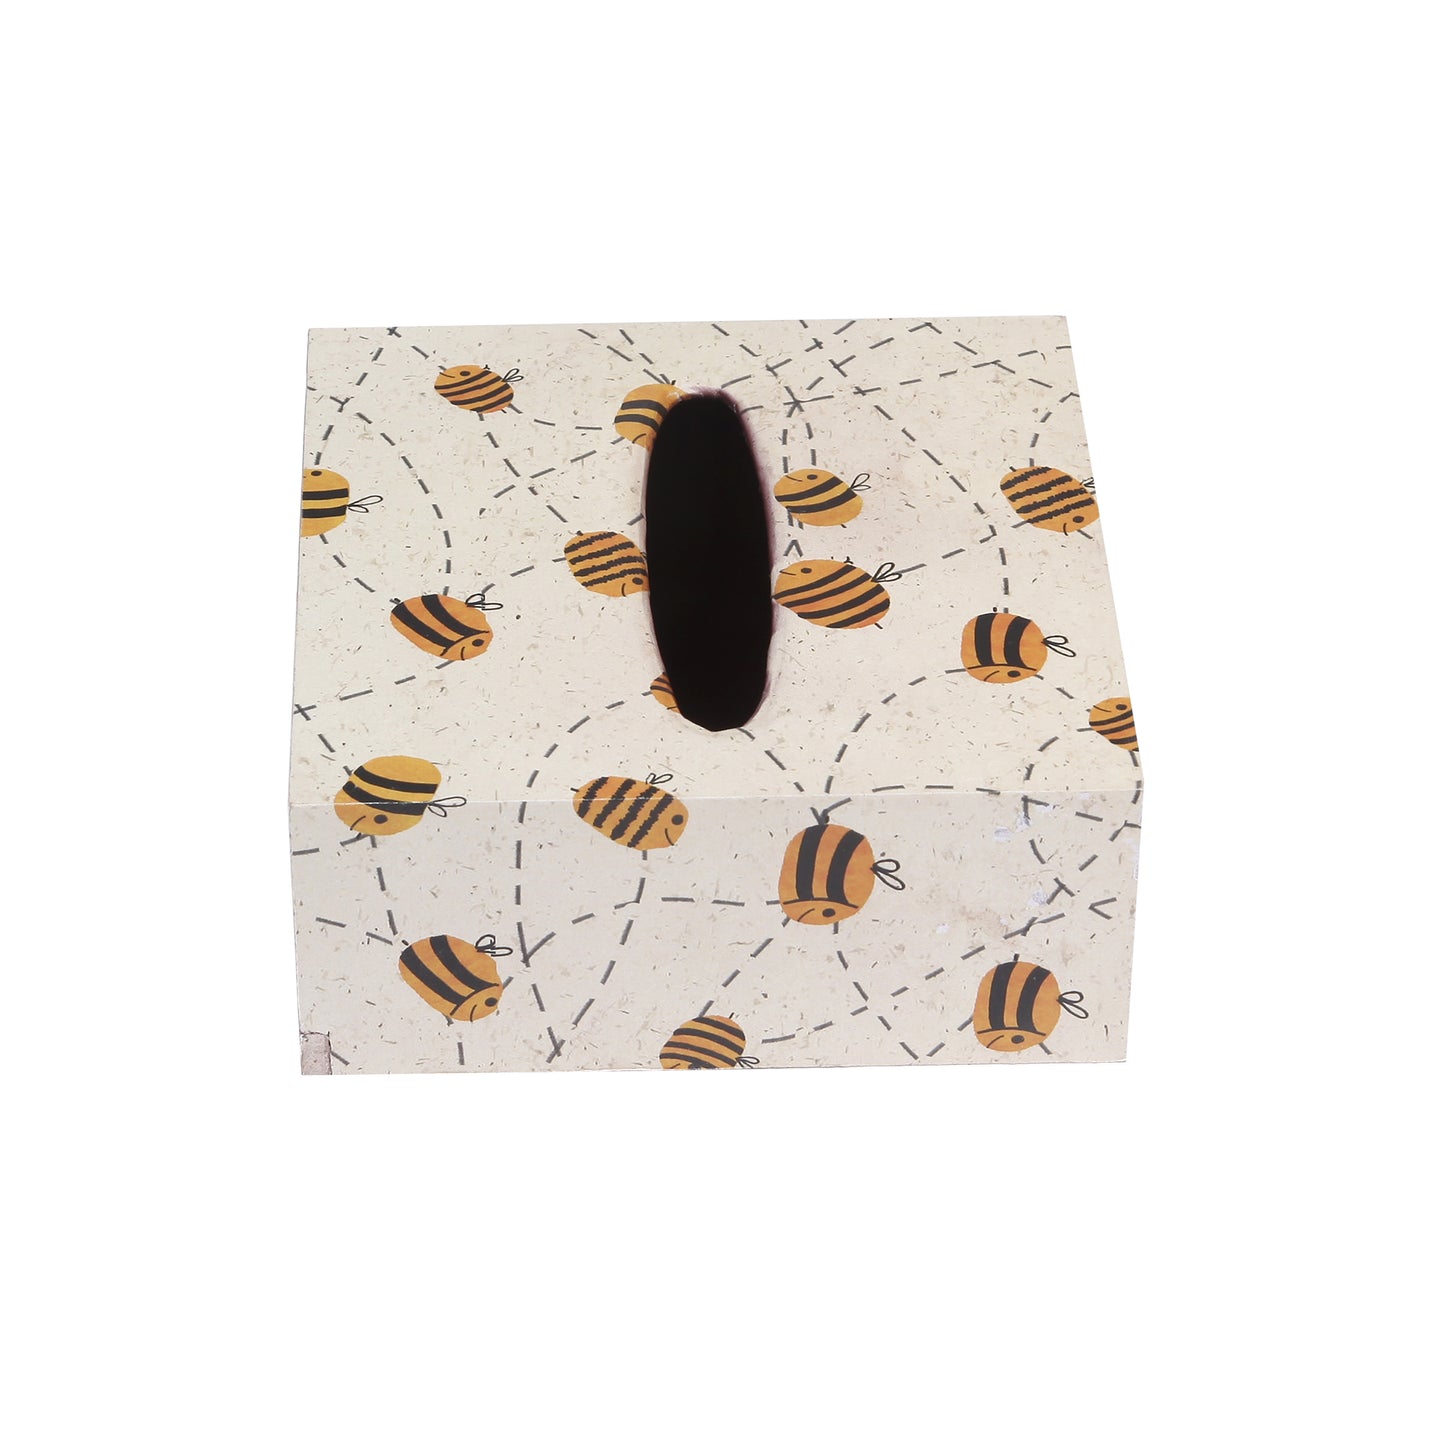 A Tiny Mistake Buzybee Square Tissue Box, 18 x 18 x 7.5 cm